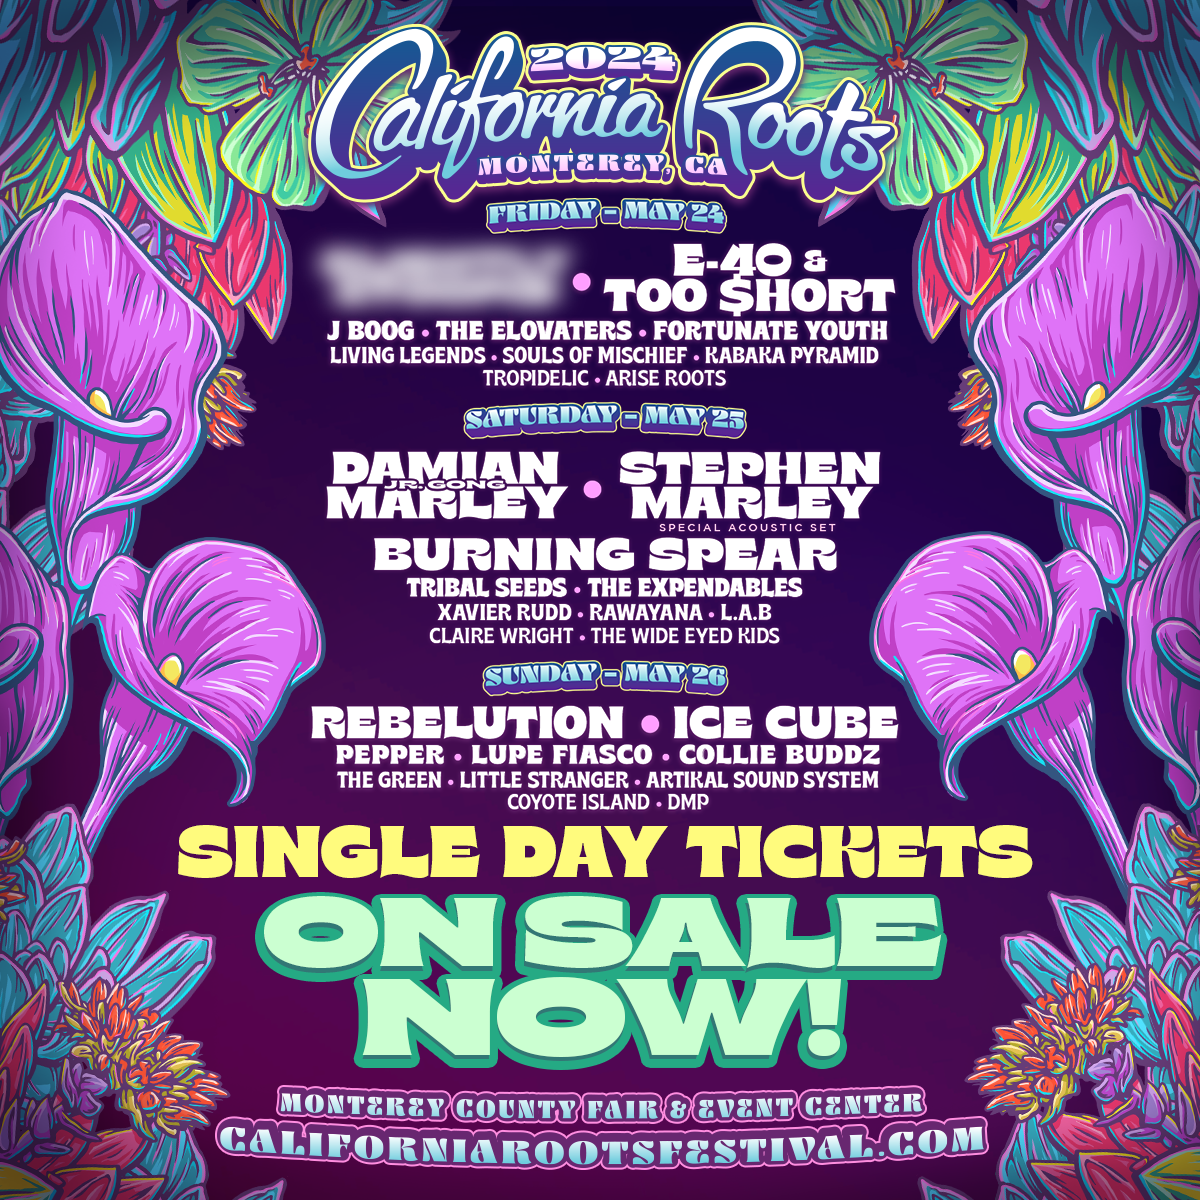 California Roots festival schedule